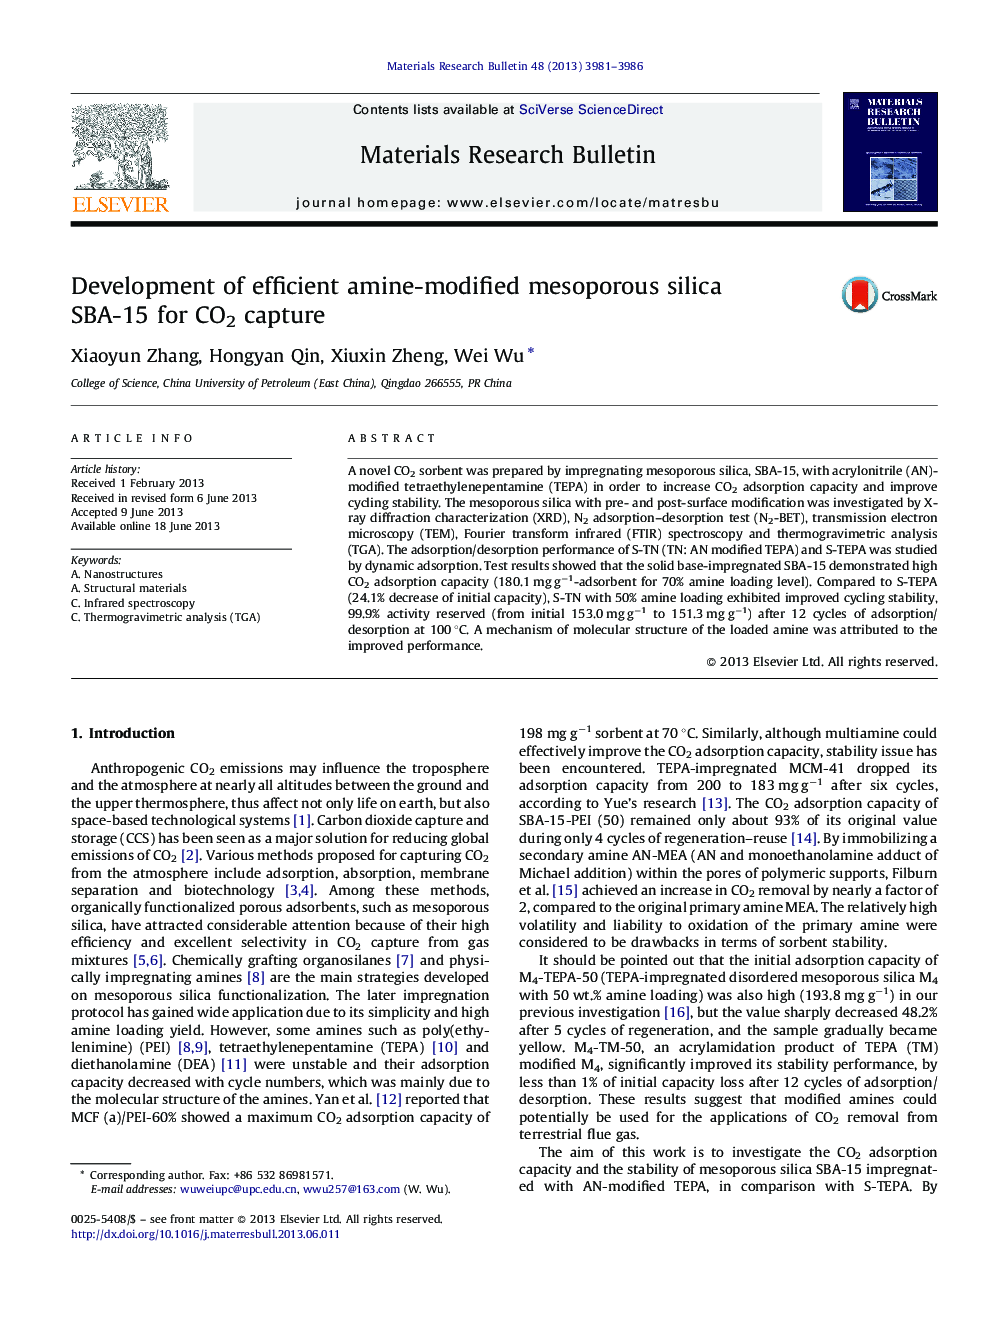 Development of efficient amine-modified mesoporous silica SBA-15 for CO2 capture